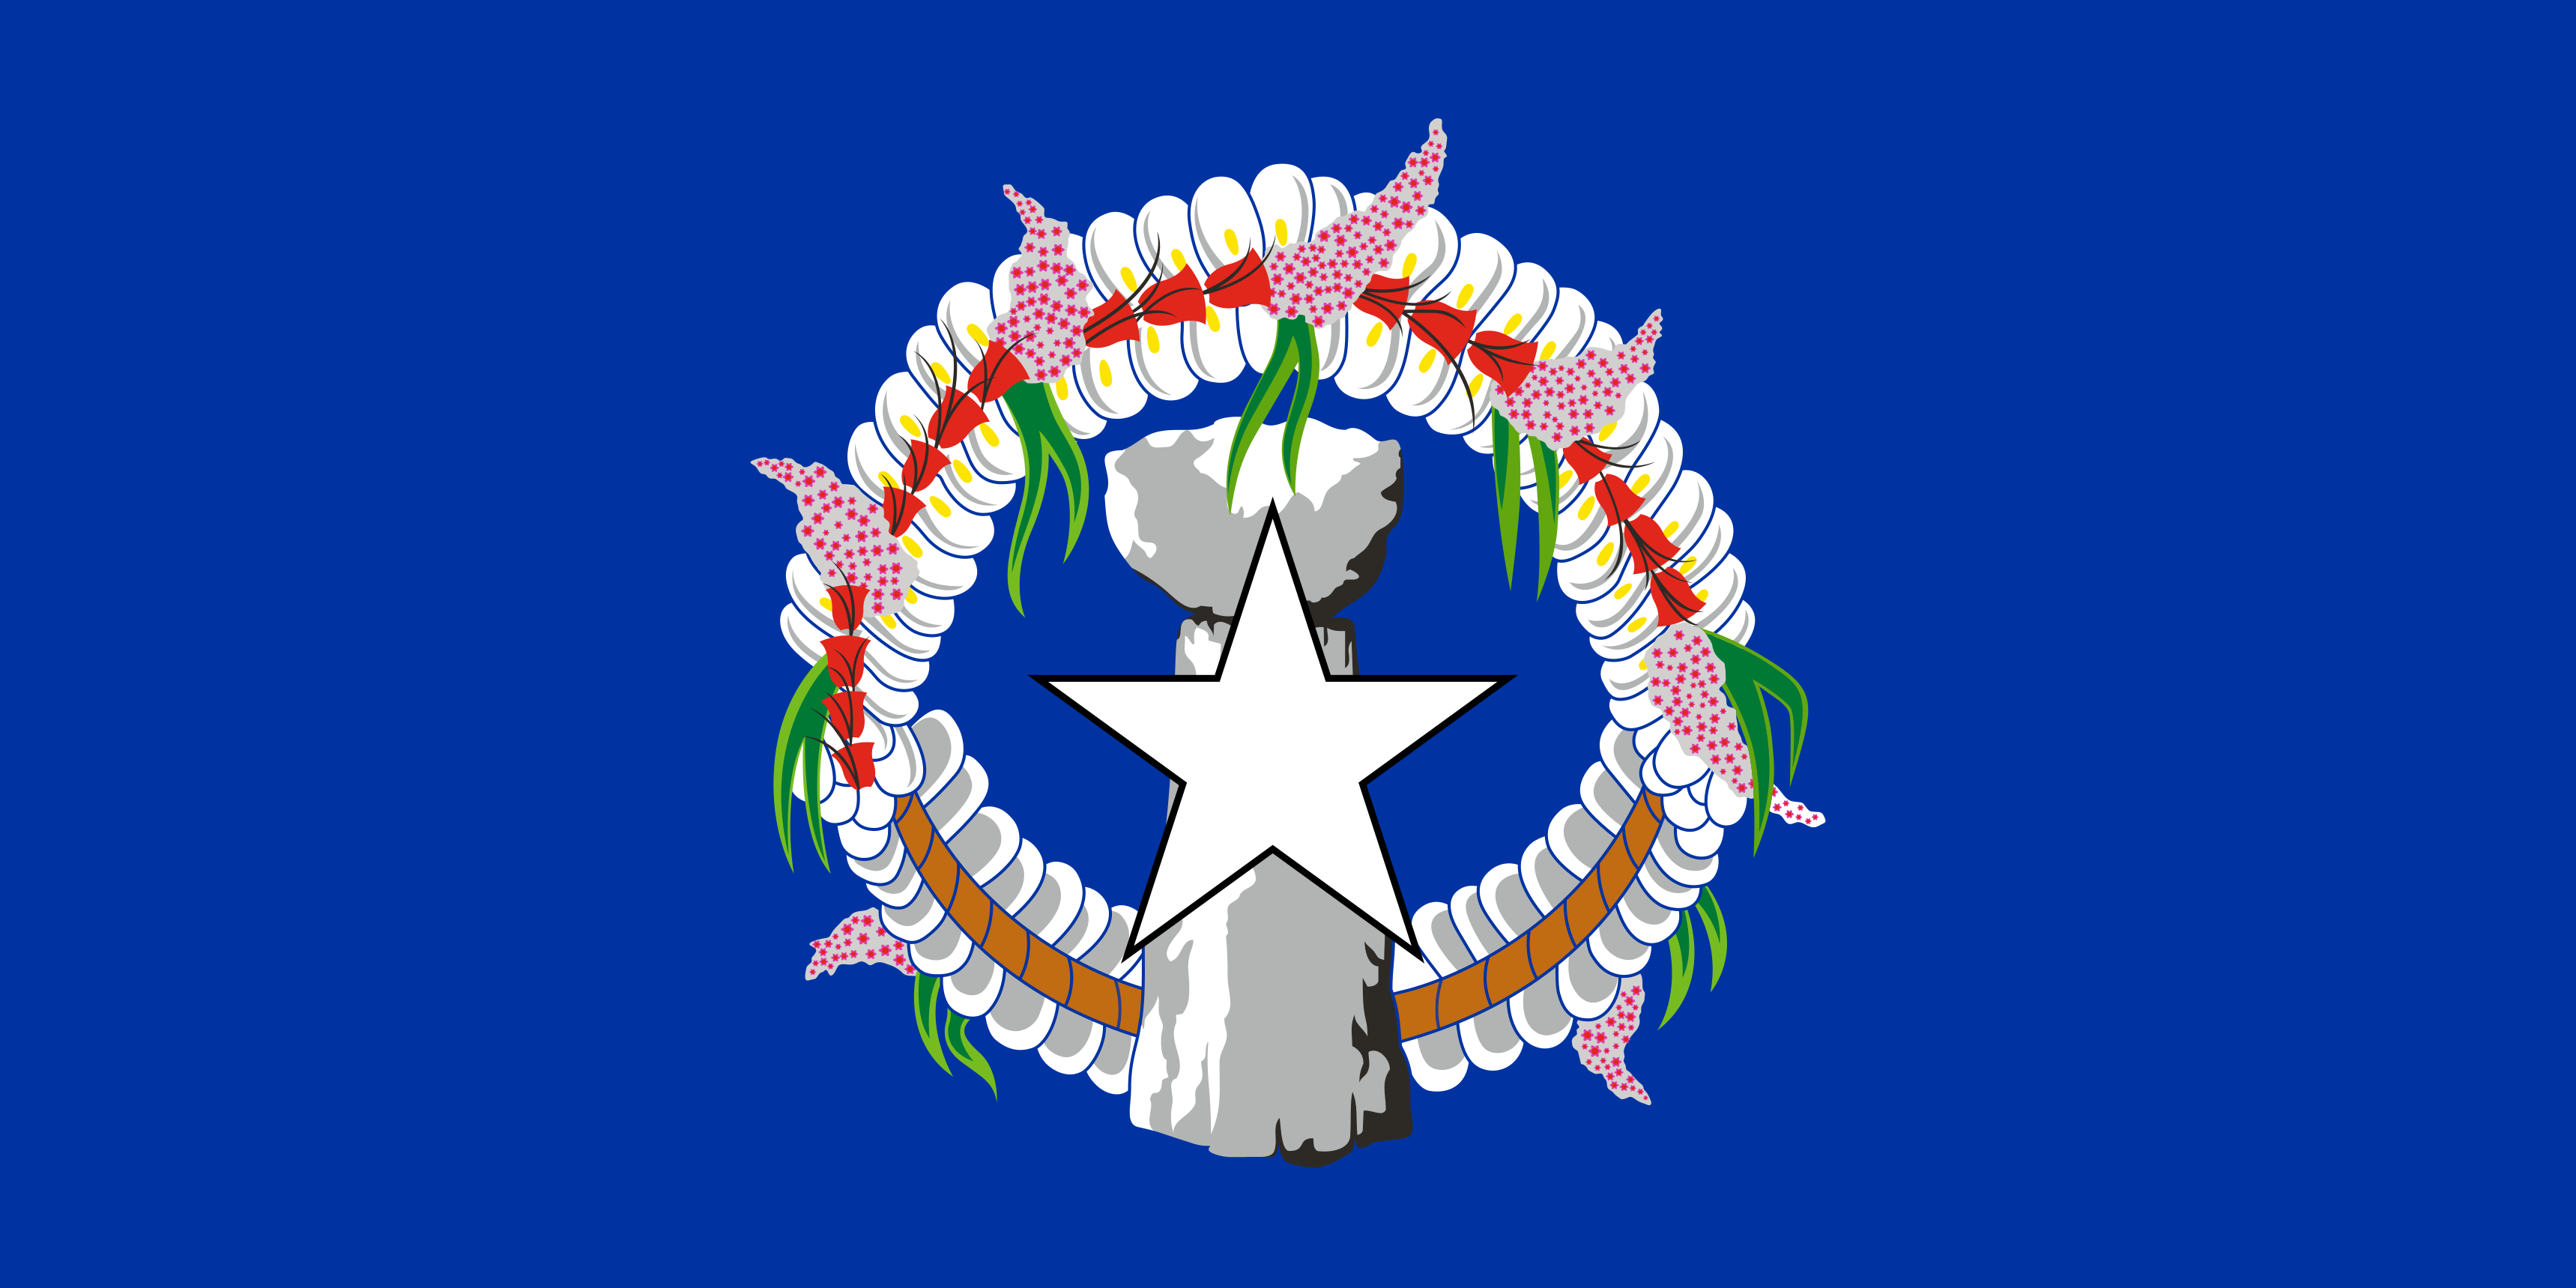 Northern Mariana Islands Flag Image - Free Download